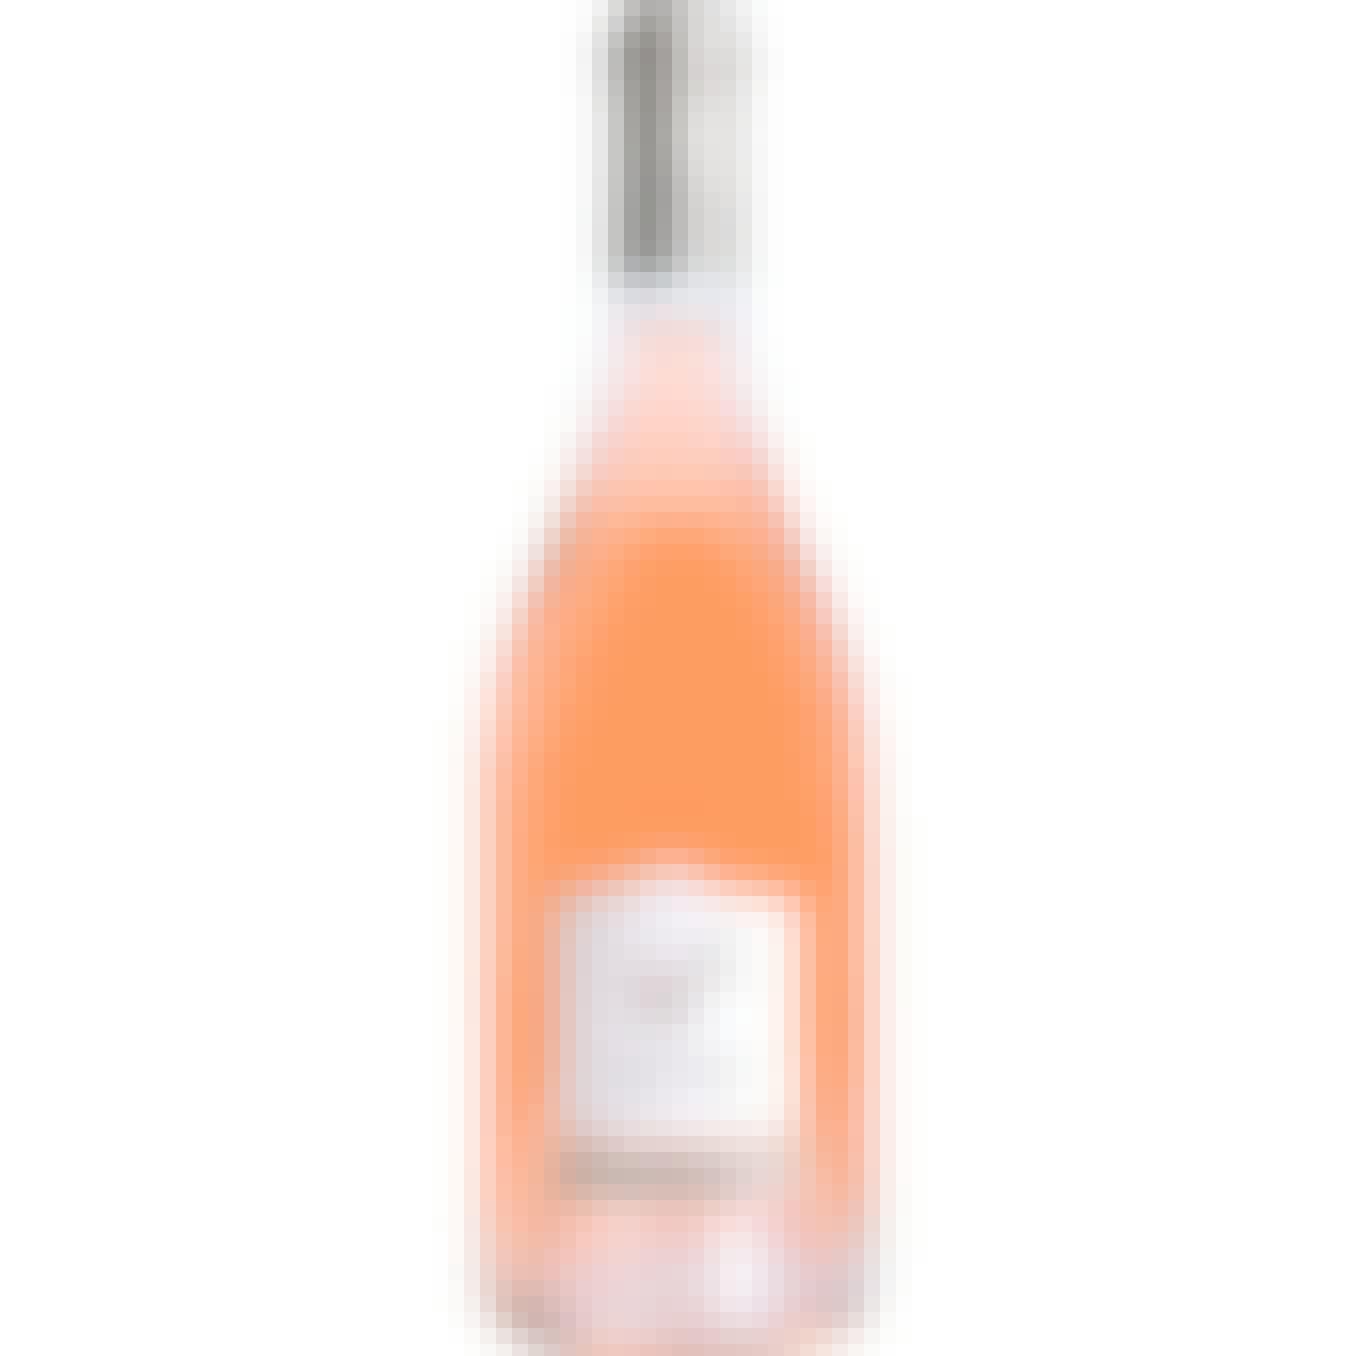 Chateau-Gassier Cuvee 946 Rosé 2018 750ml